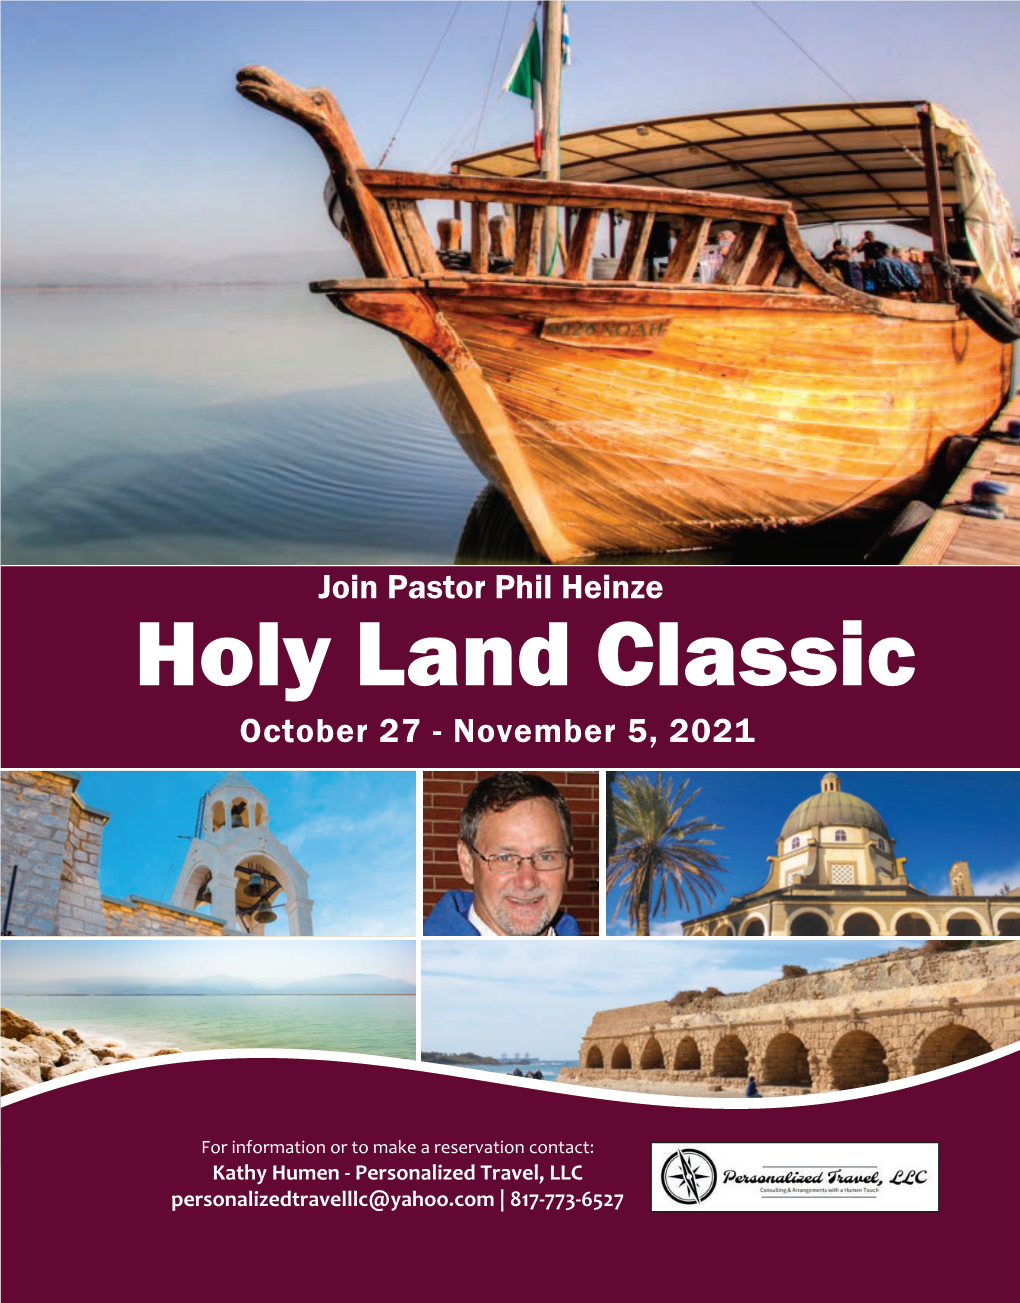 Holy Land Classic October 27 - November 5, 2021